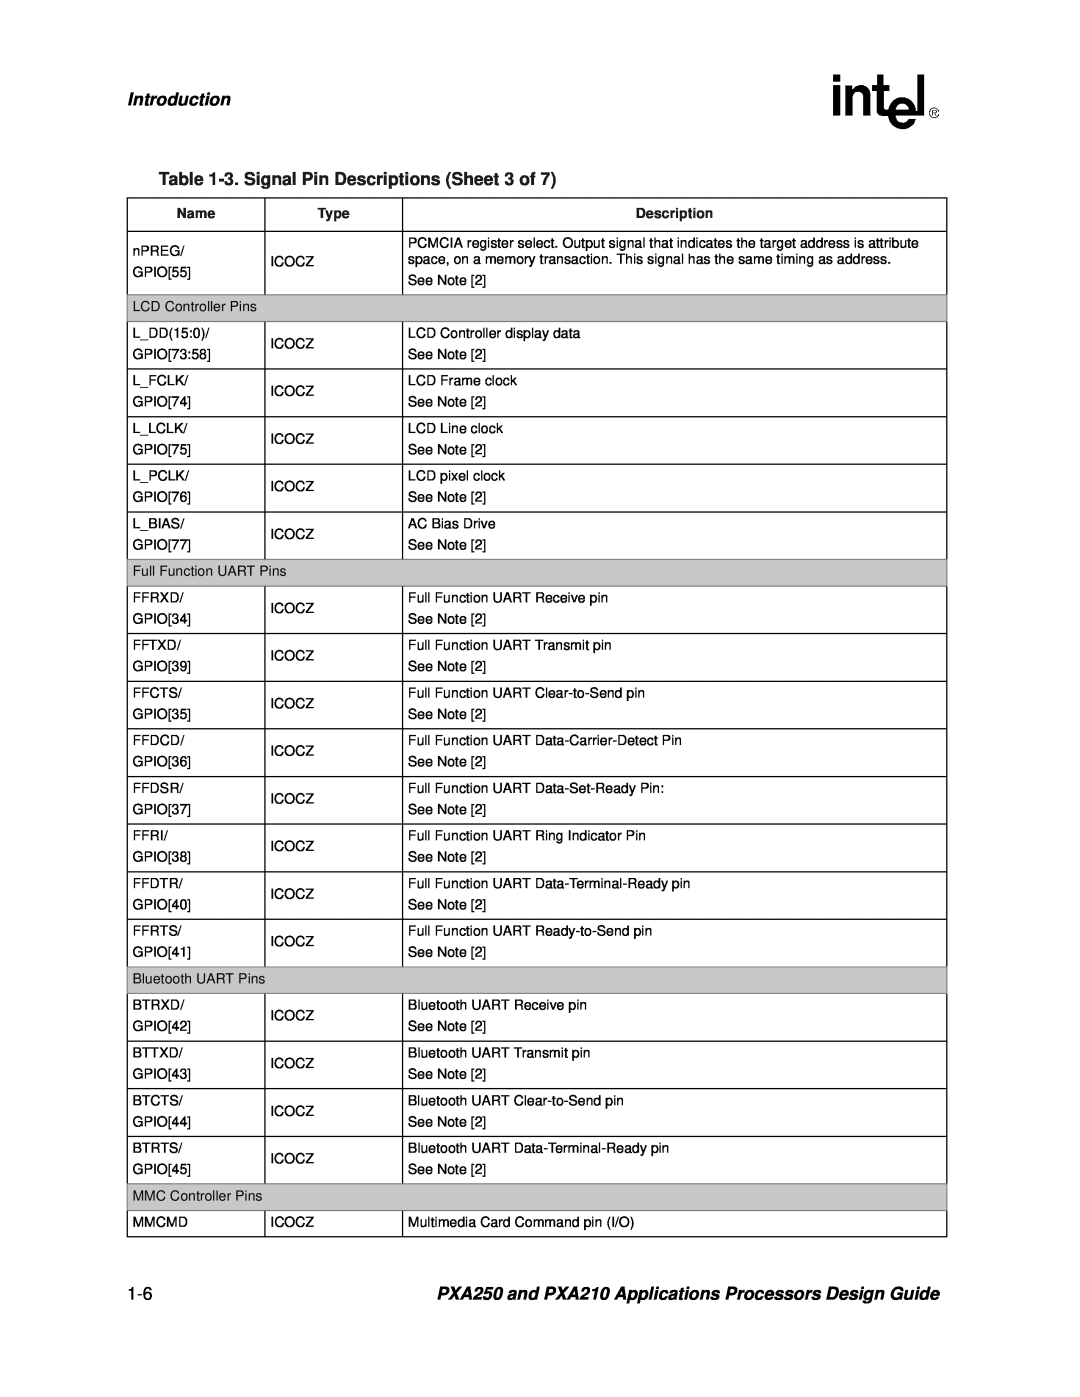 Intel PXA250 and PXA210 manual Introduction, 3. Signal Pin Descriptions Sheet 3 of 